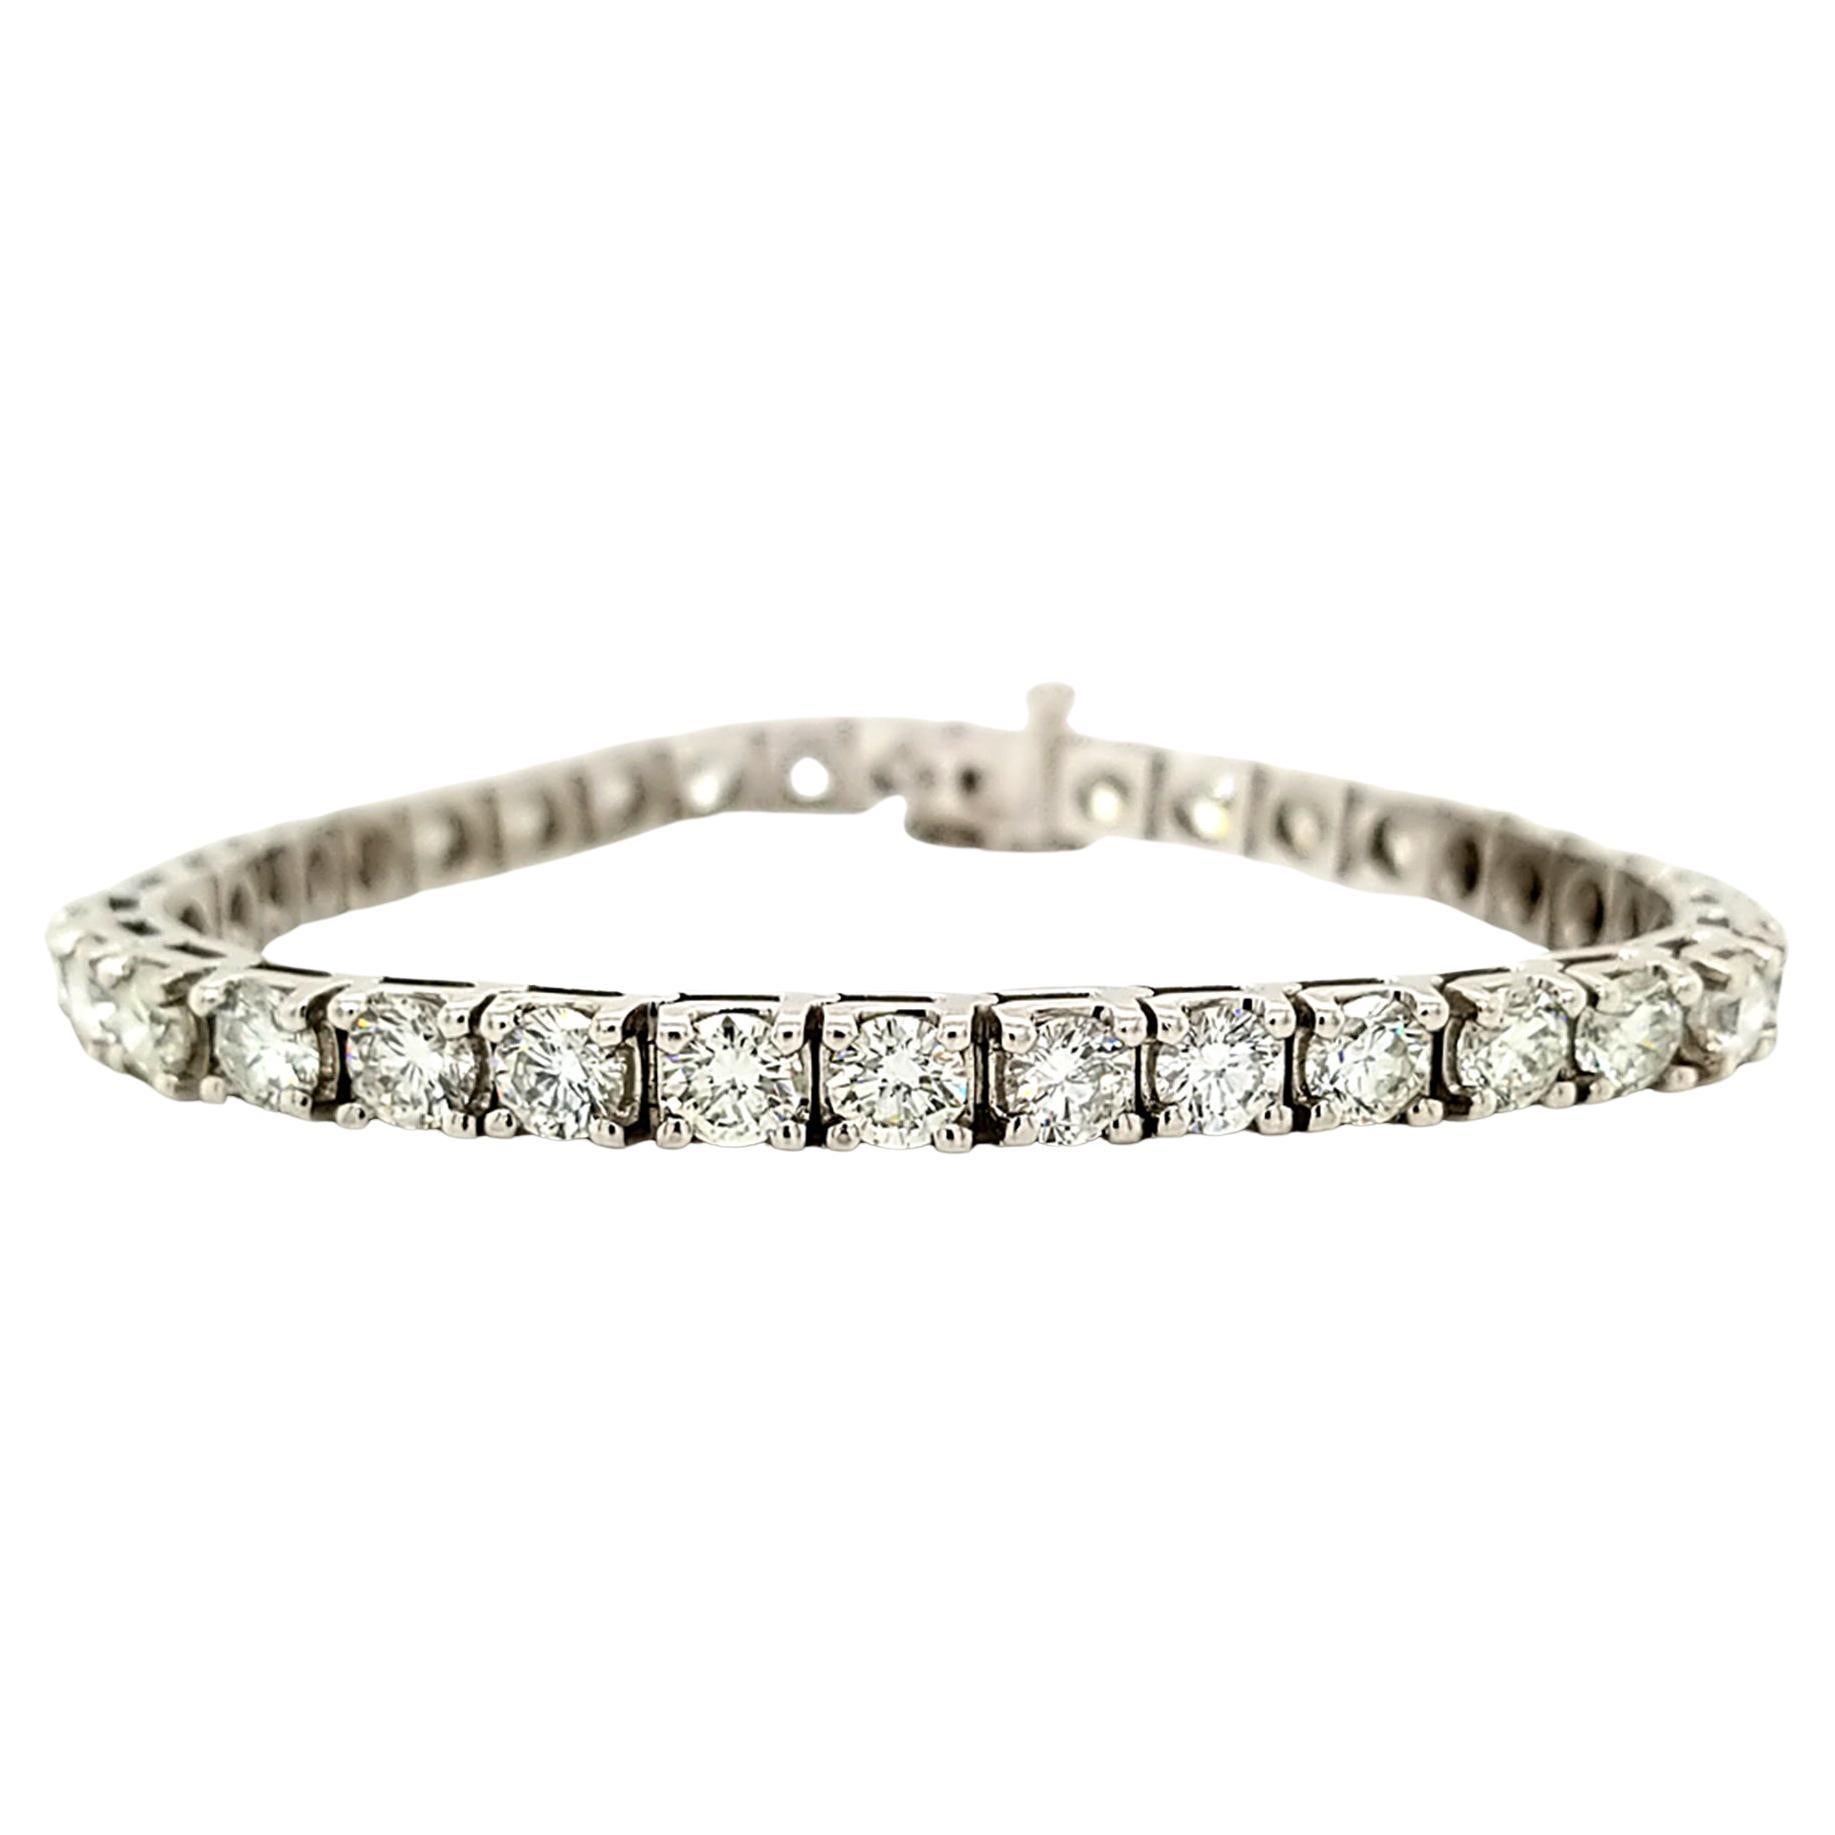 Spectra Fine Jewelry, 9 Carat Round Diamond Tennis Bracelet